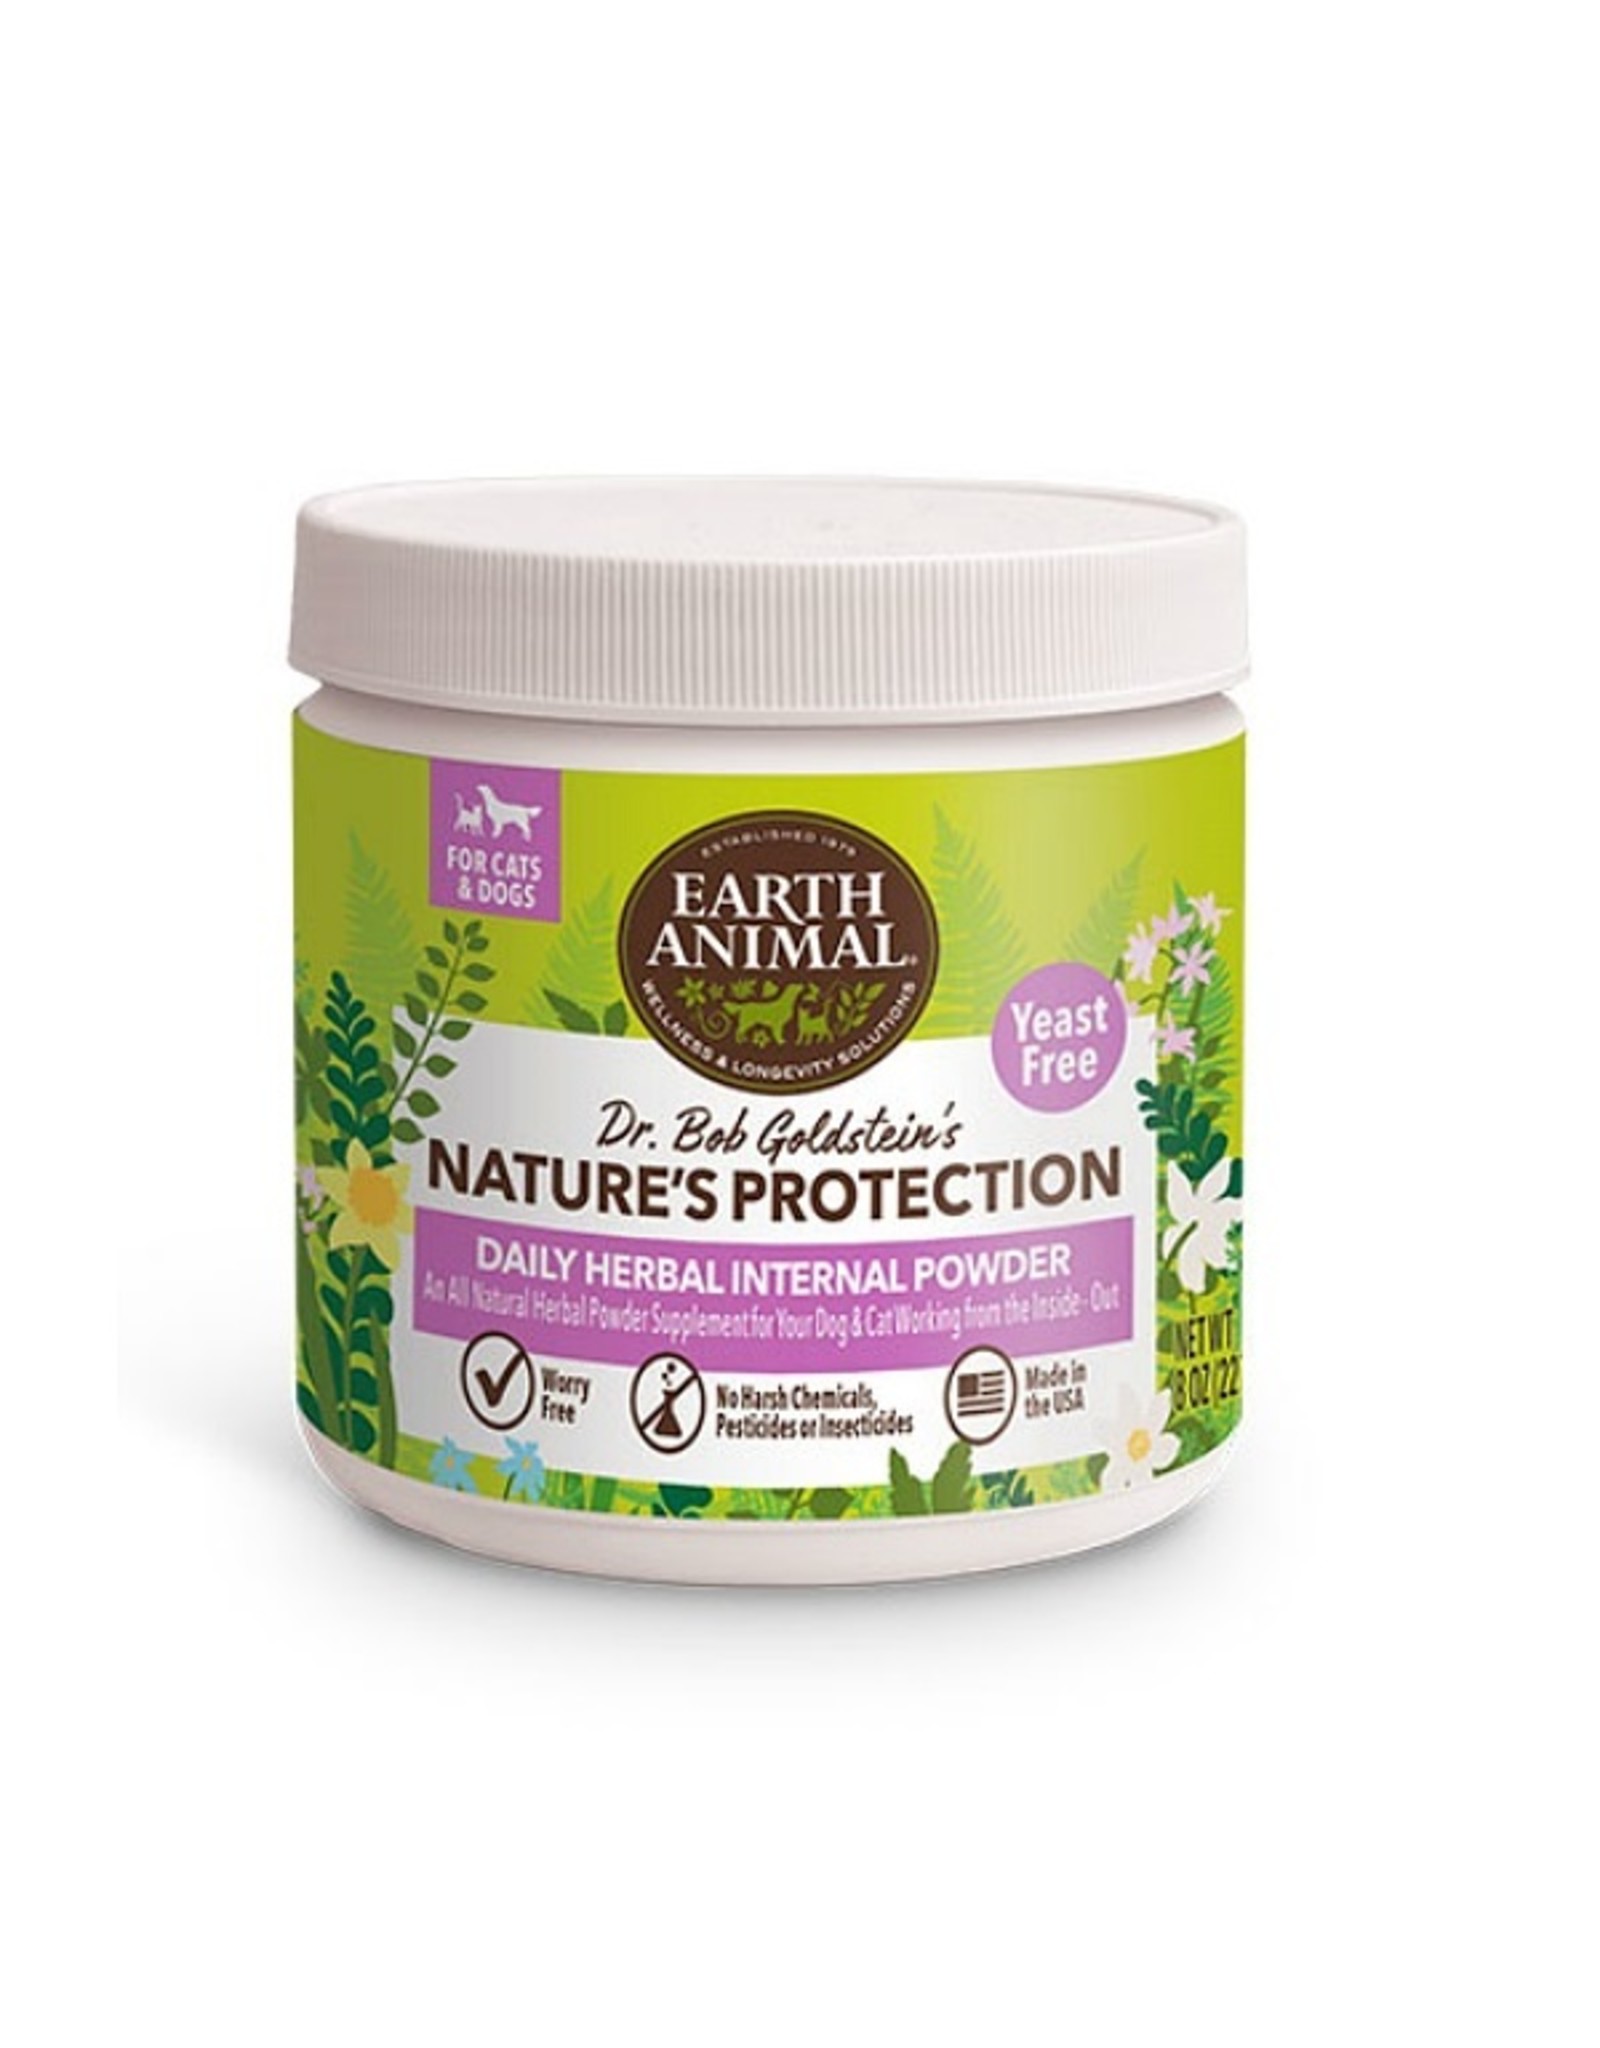 Earth Animal Earth Animal Herbal Internal Powder Yeast Free 8oz